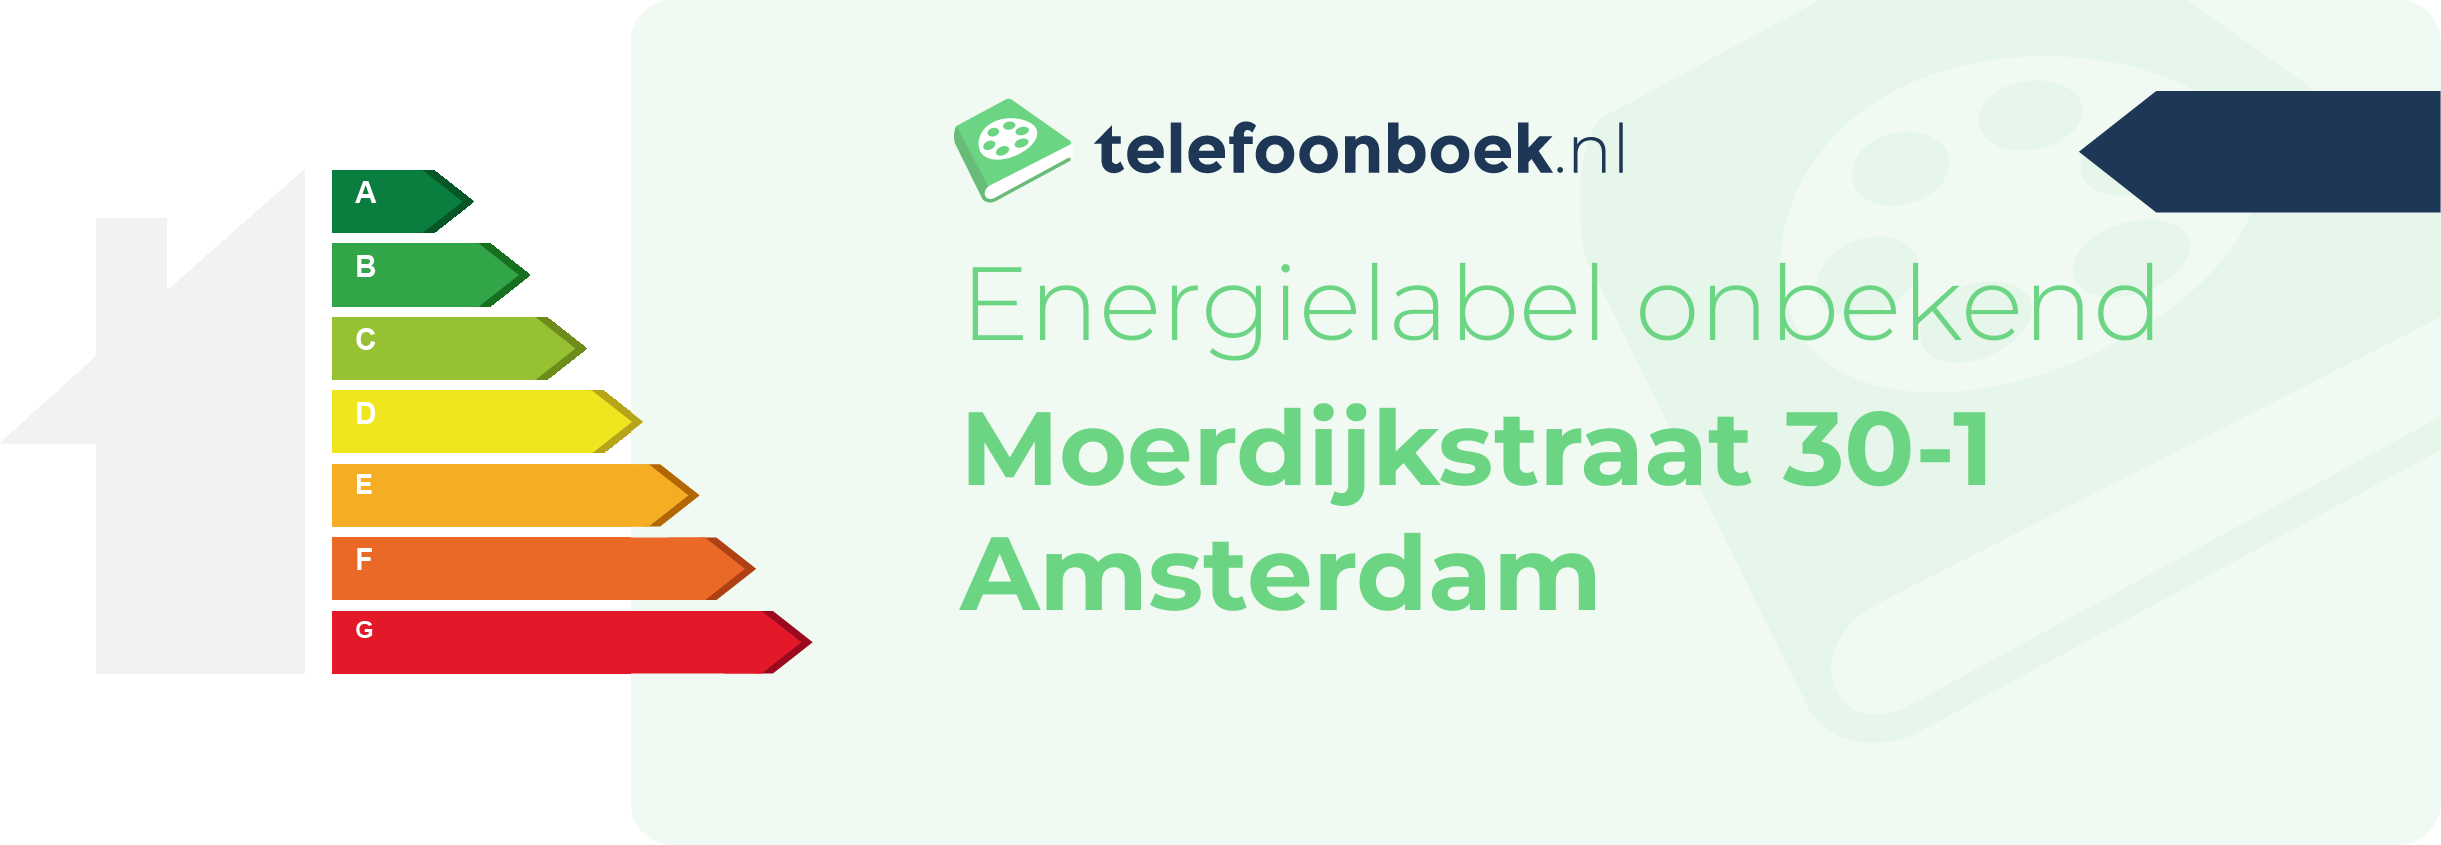 Energielabel Moerdijkstraat 30-1 Amsterdam